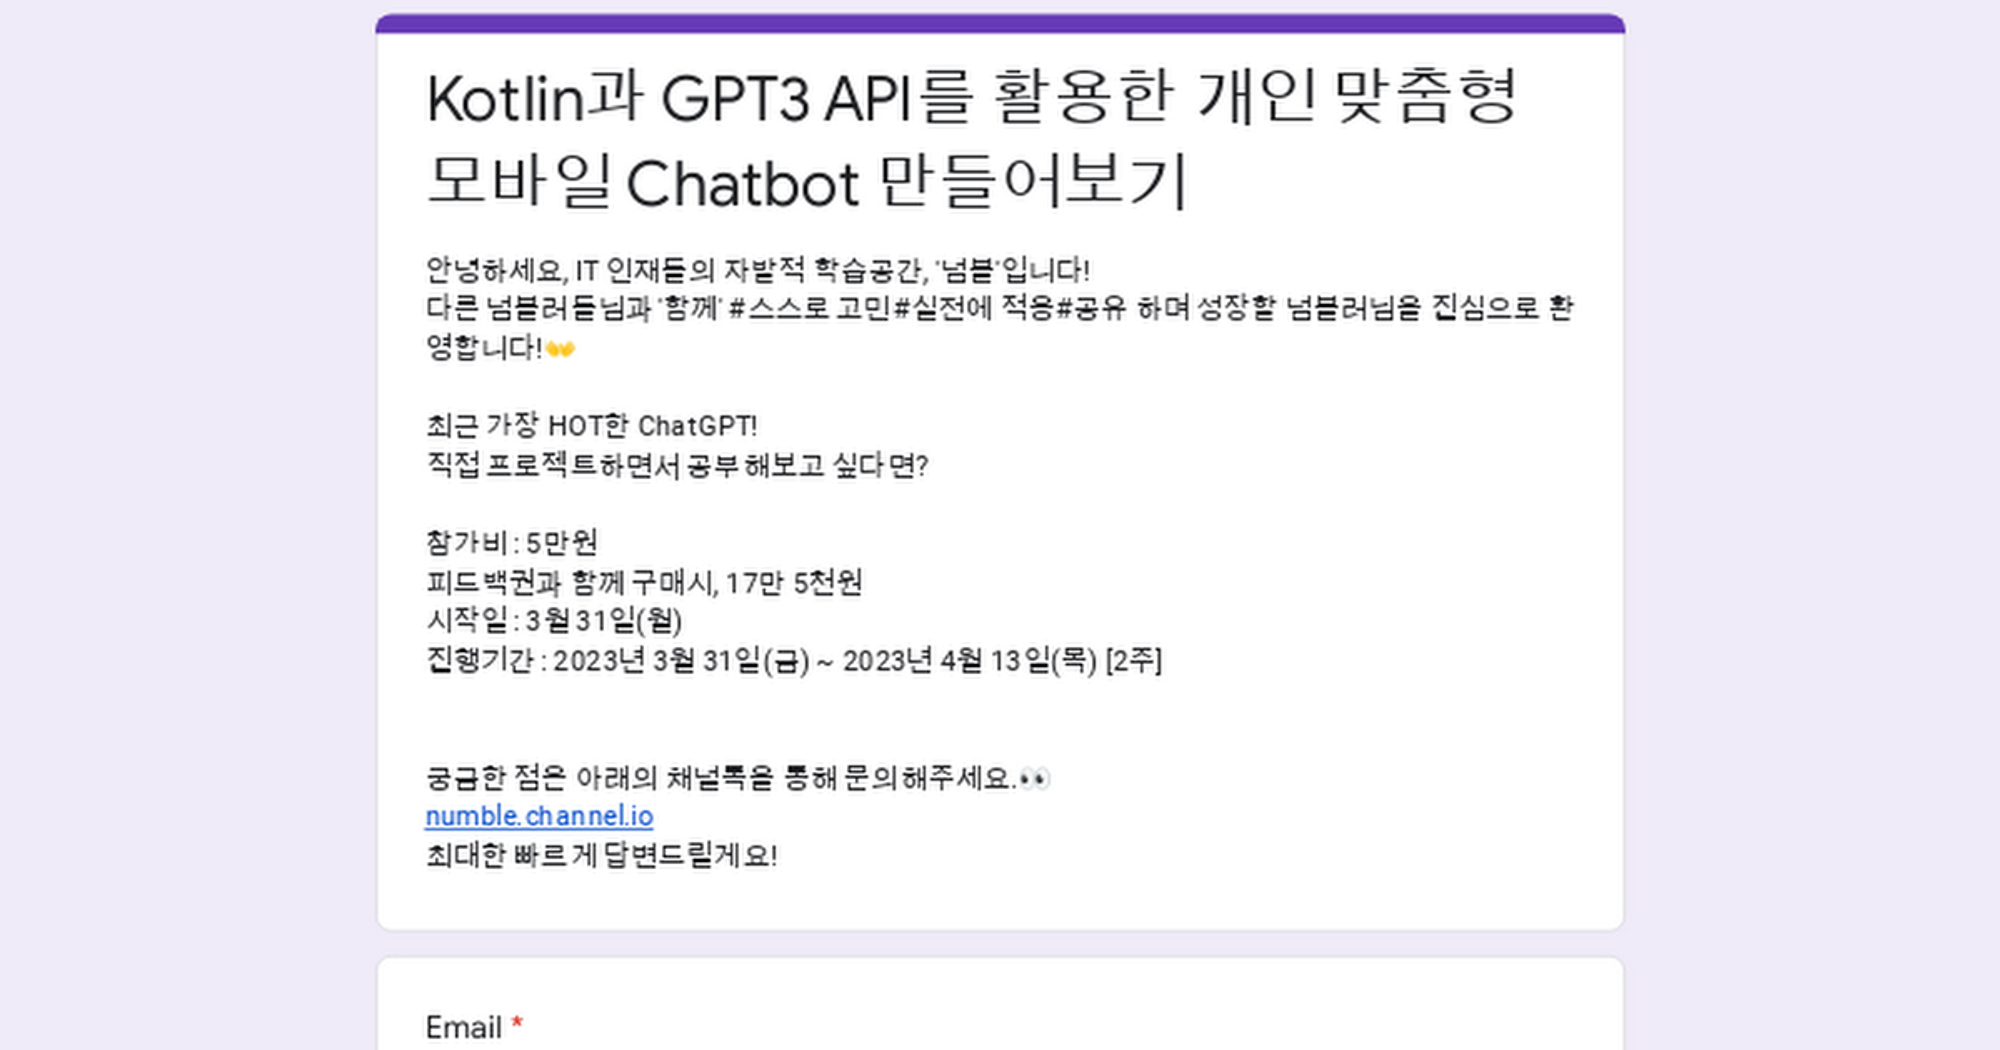 GPT3 API를 활용한 개인용 모바일 Chatbot 만들어보기